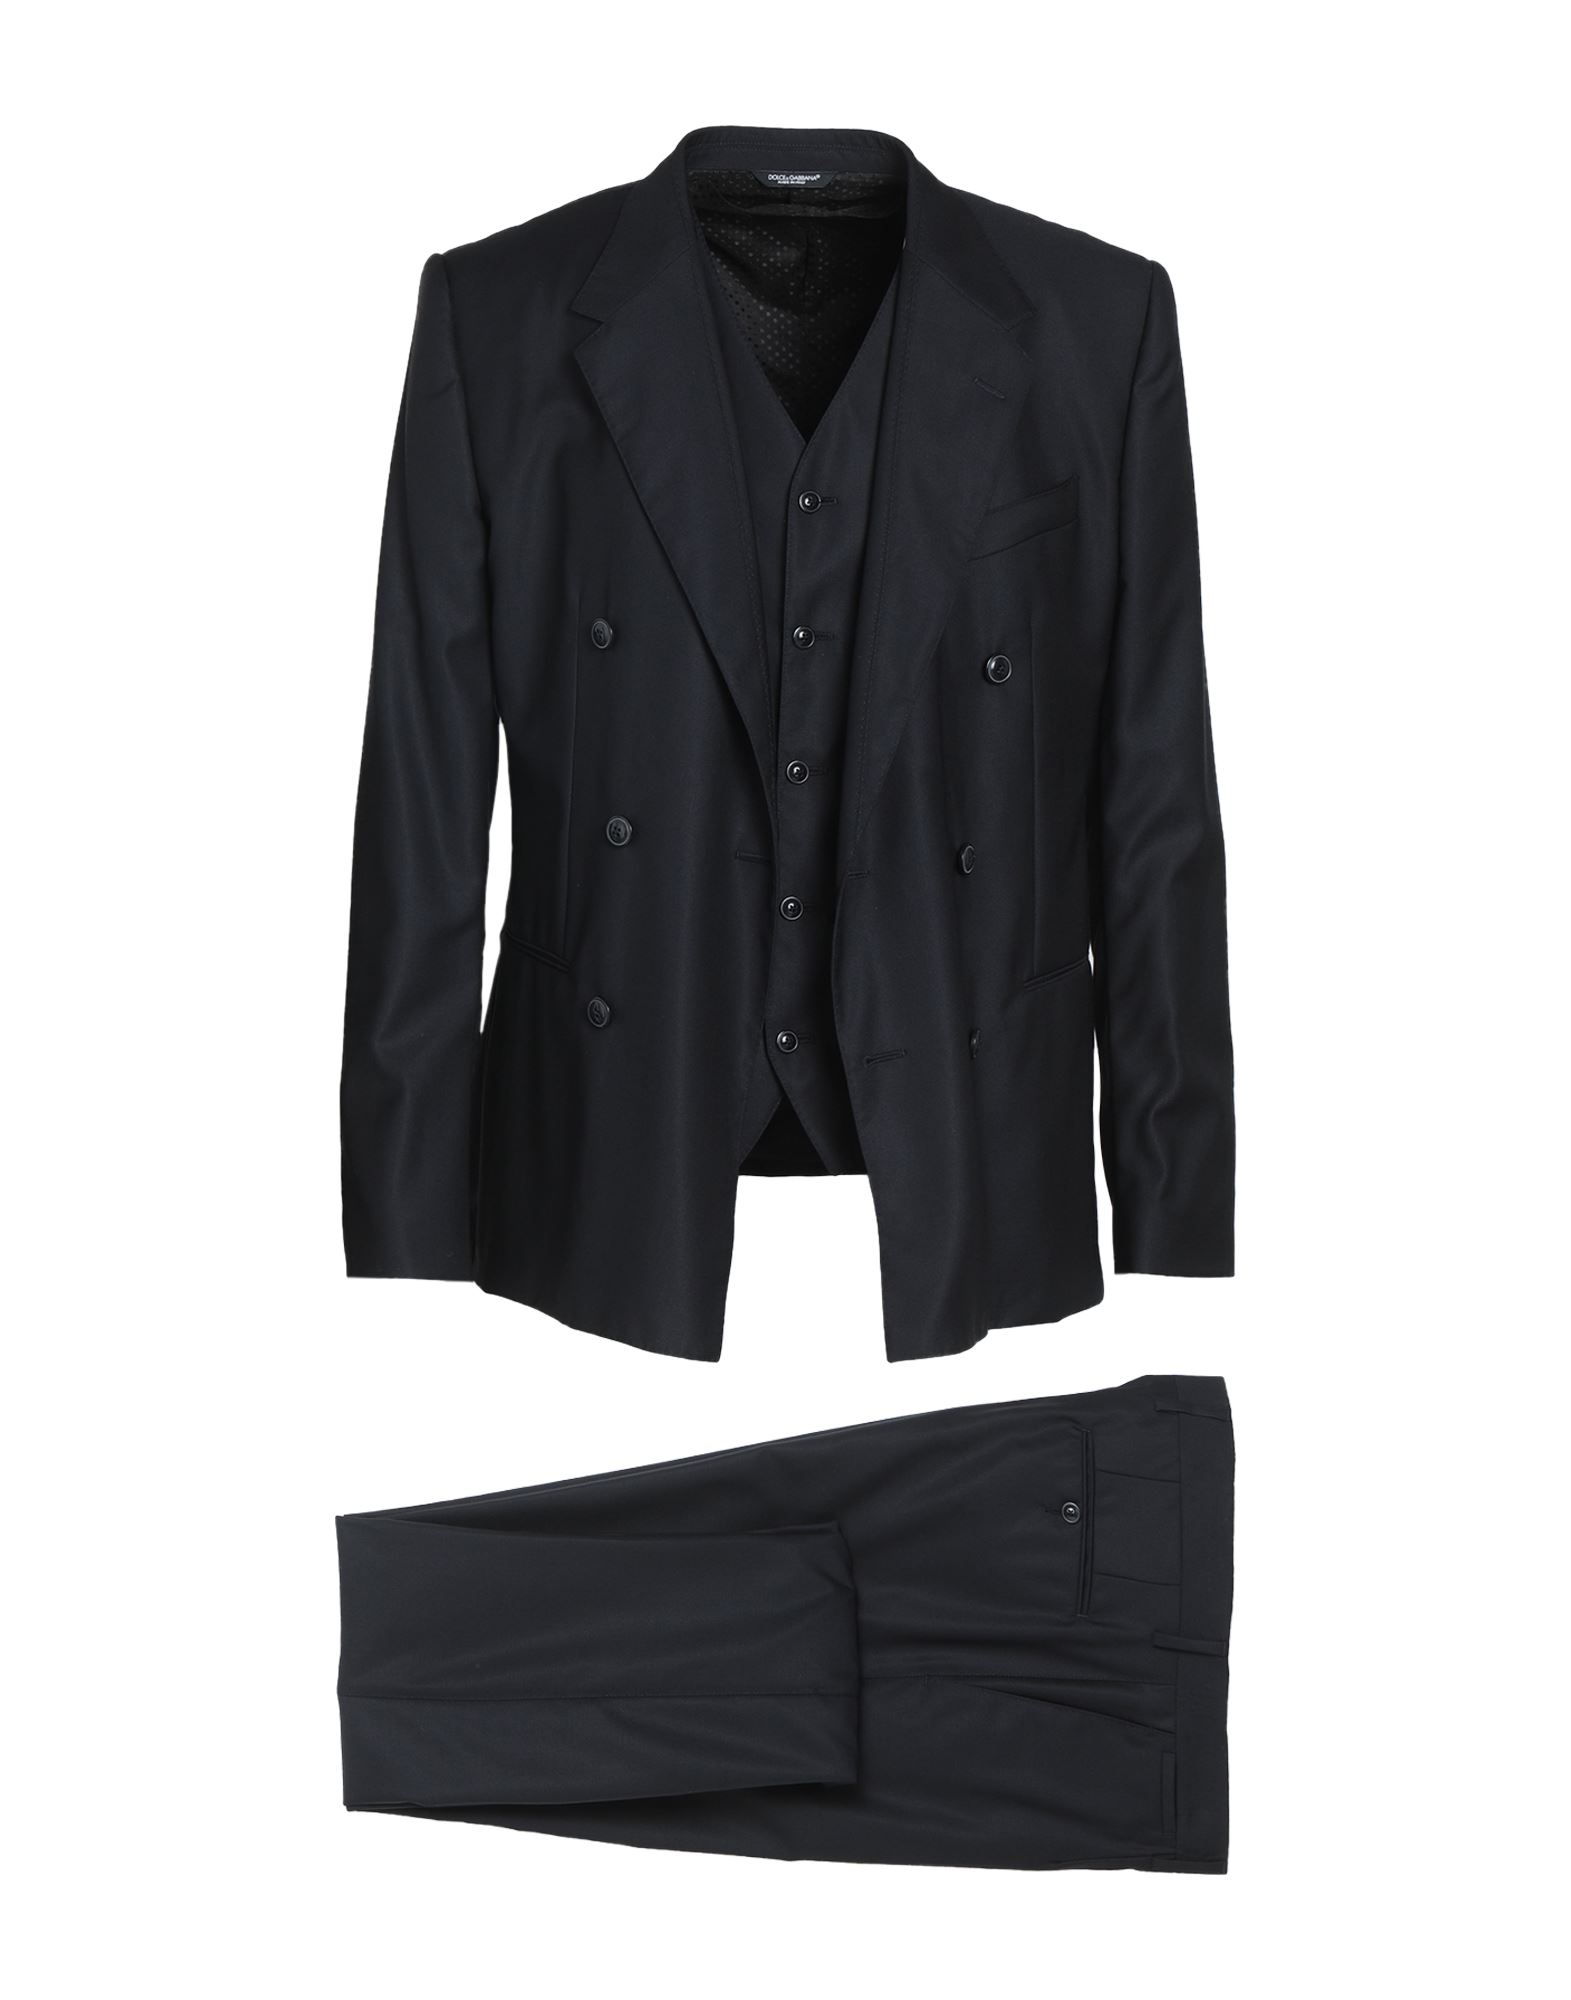 DOLCE & GABBANA Suits | Smart Closet